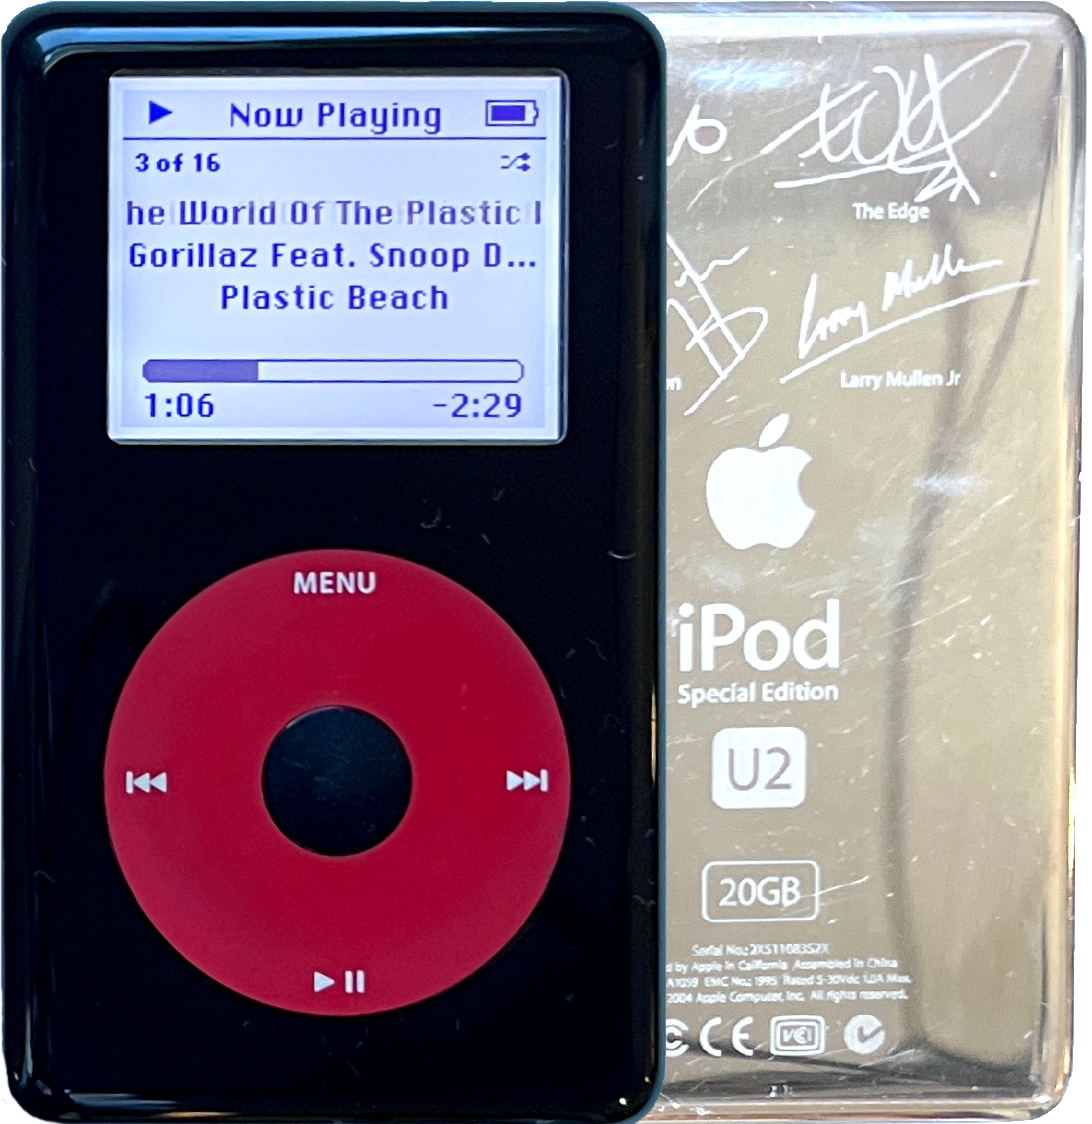 Genuine Apple iPod Classic 4th Generation Monochrome 20GB U2 Special Edition Refurbished New Battery 1200mah